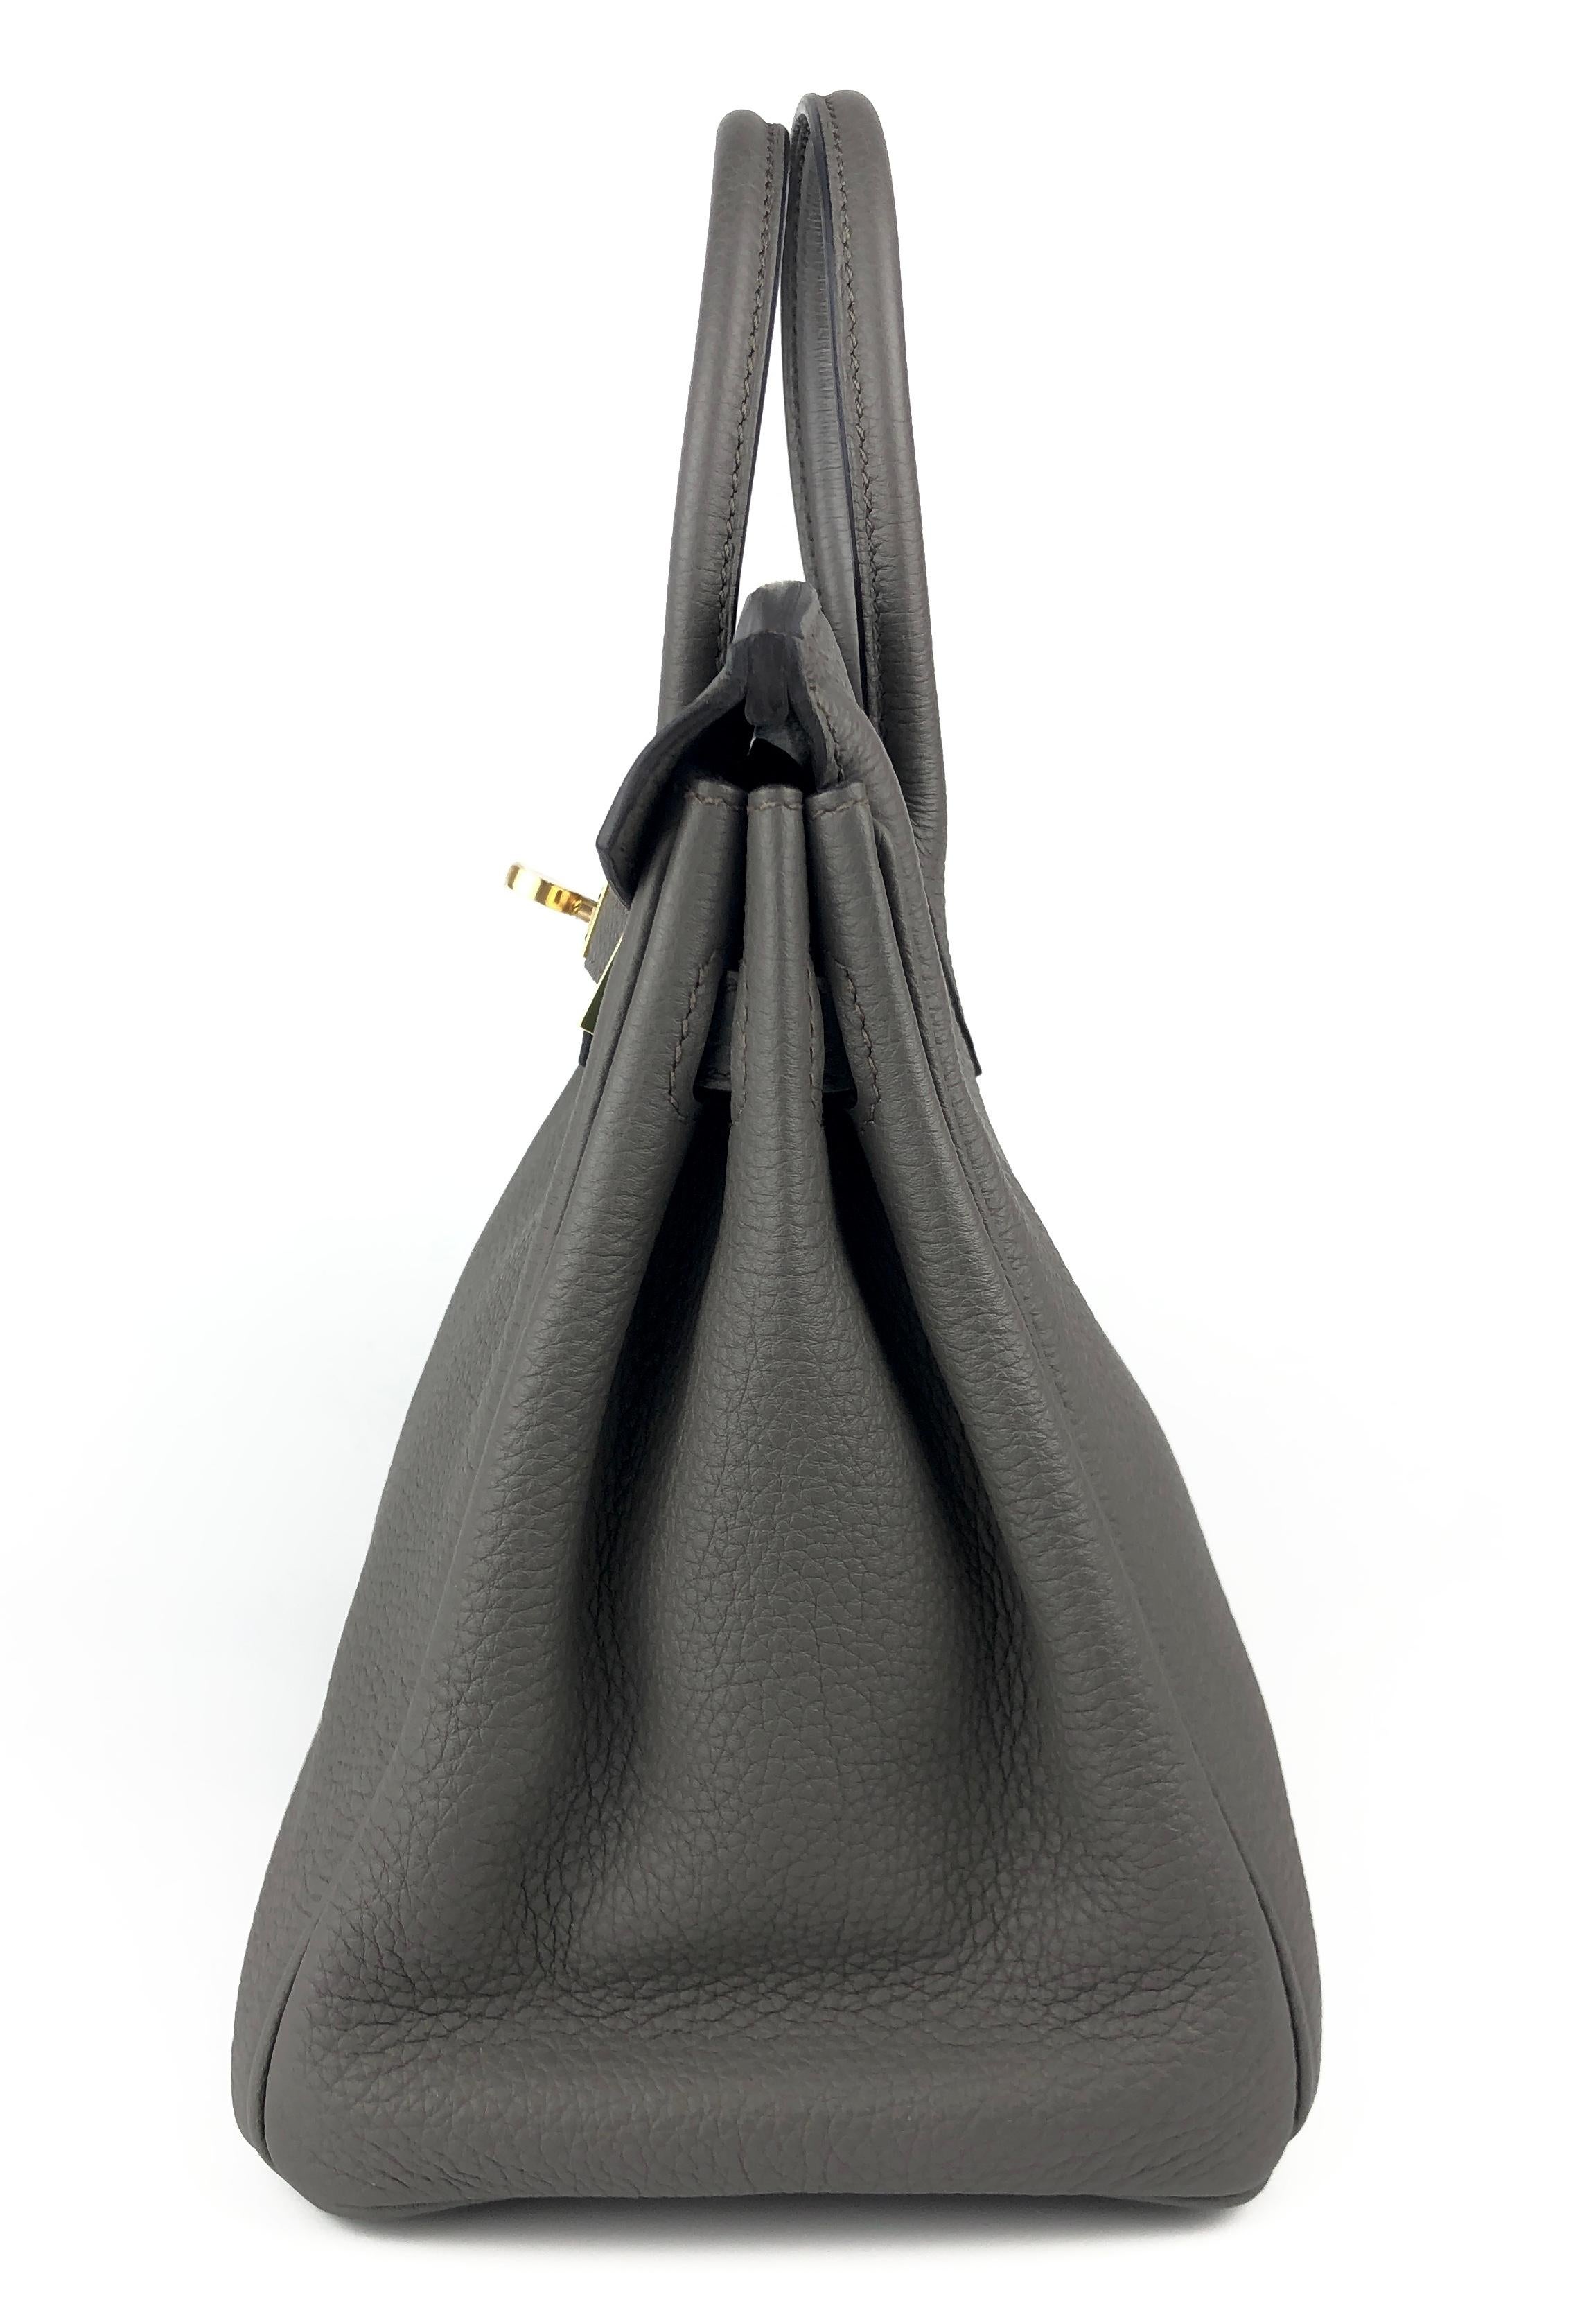 Hermes Birkin 25 Etain Gris Togo Cuir Handbag Gold Hardware 2020 en vente 4